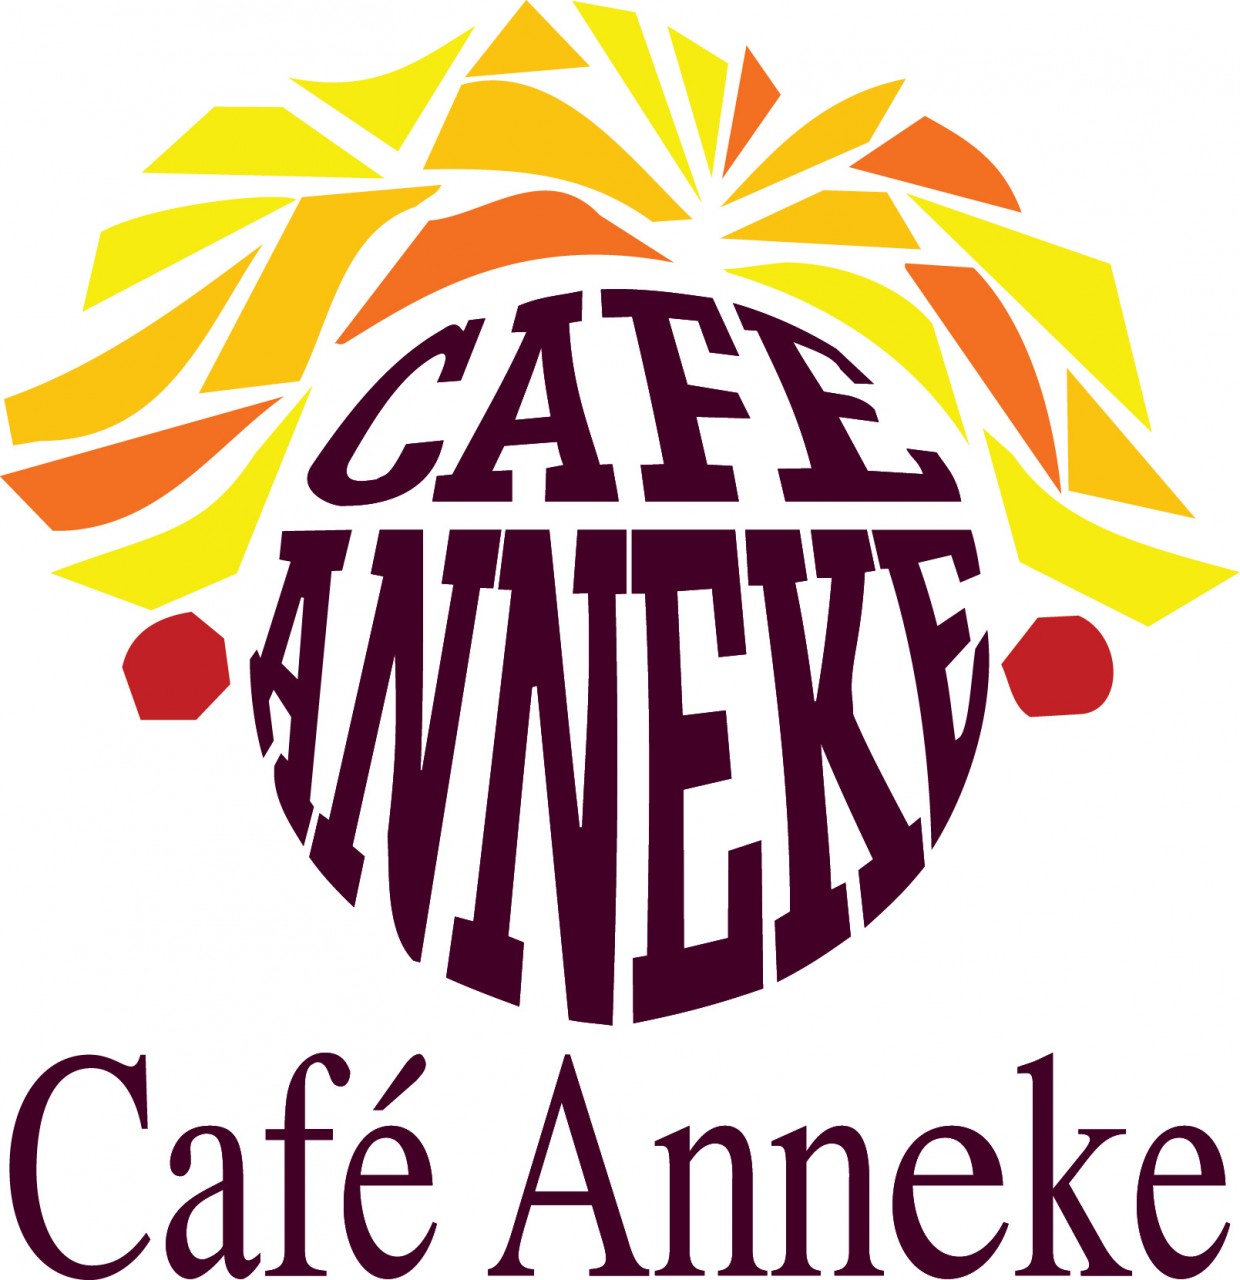 Cafe Anneke